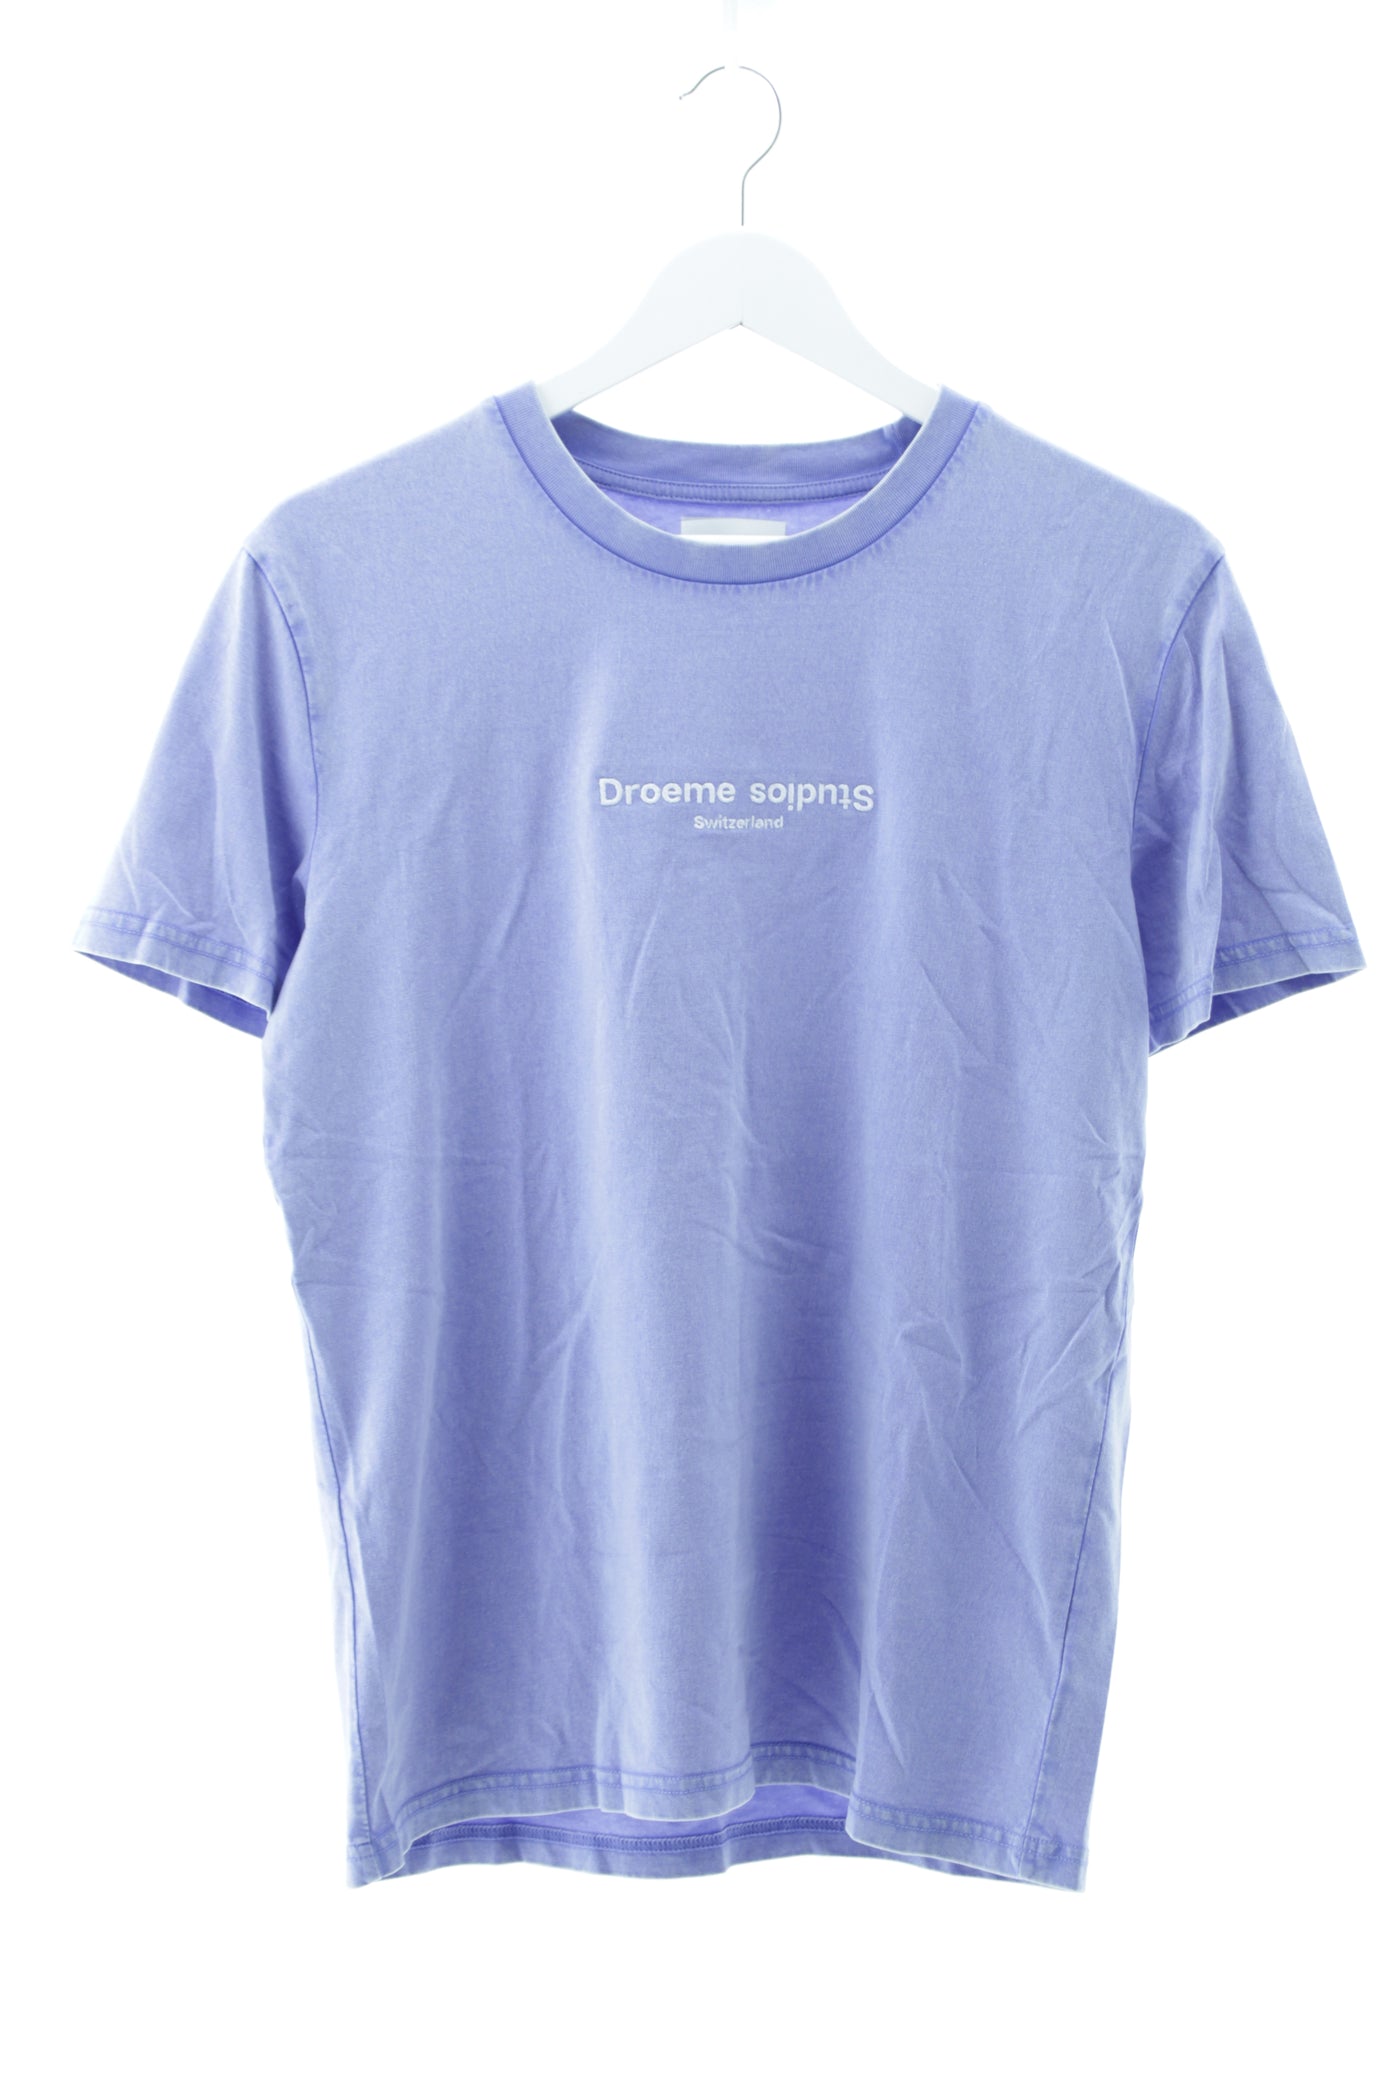 Camiseta celeste Droeme